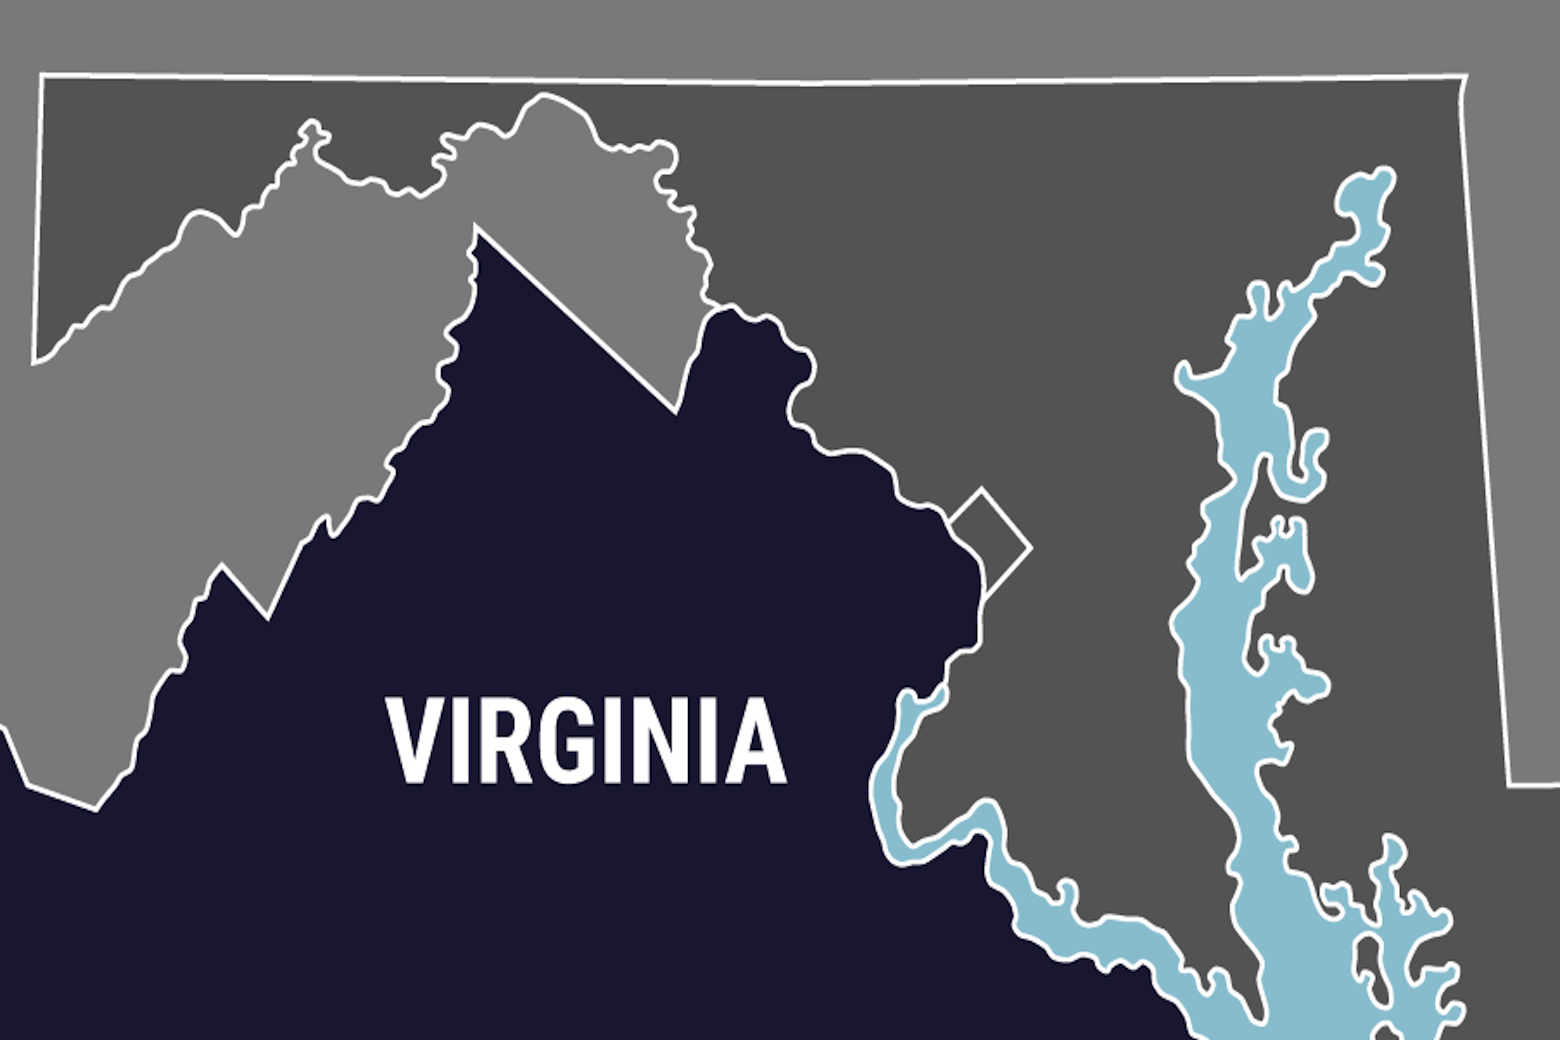 Virginia’s Franklin County won’t move its Confederate statue